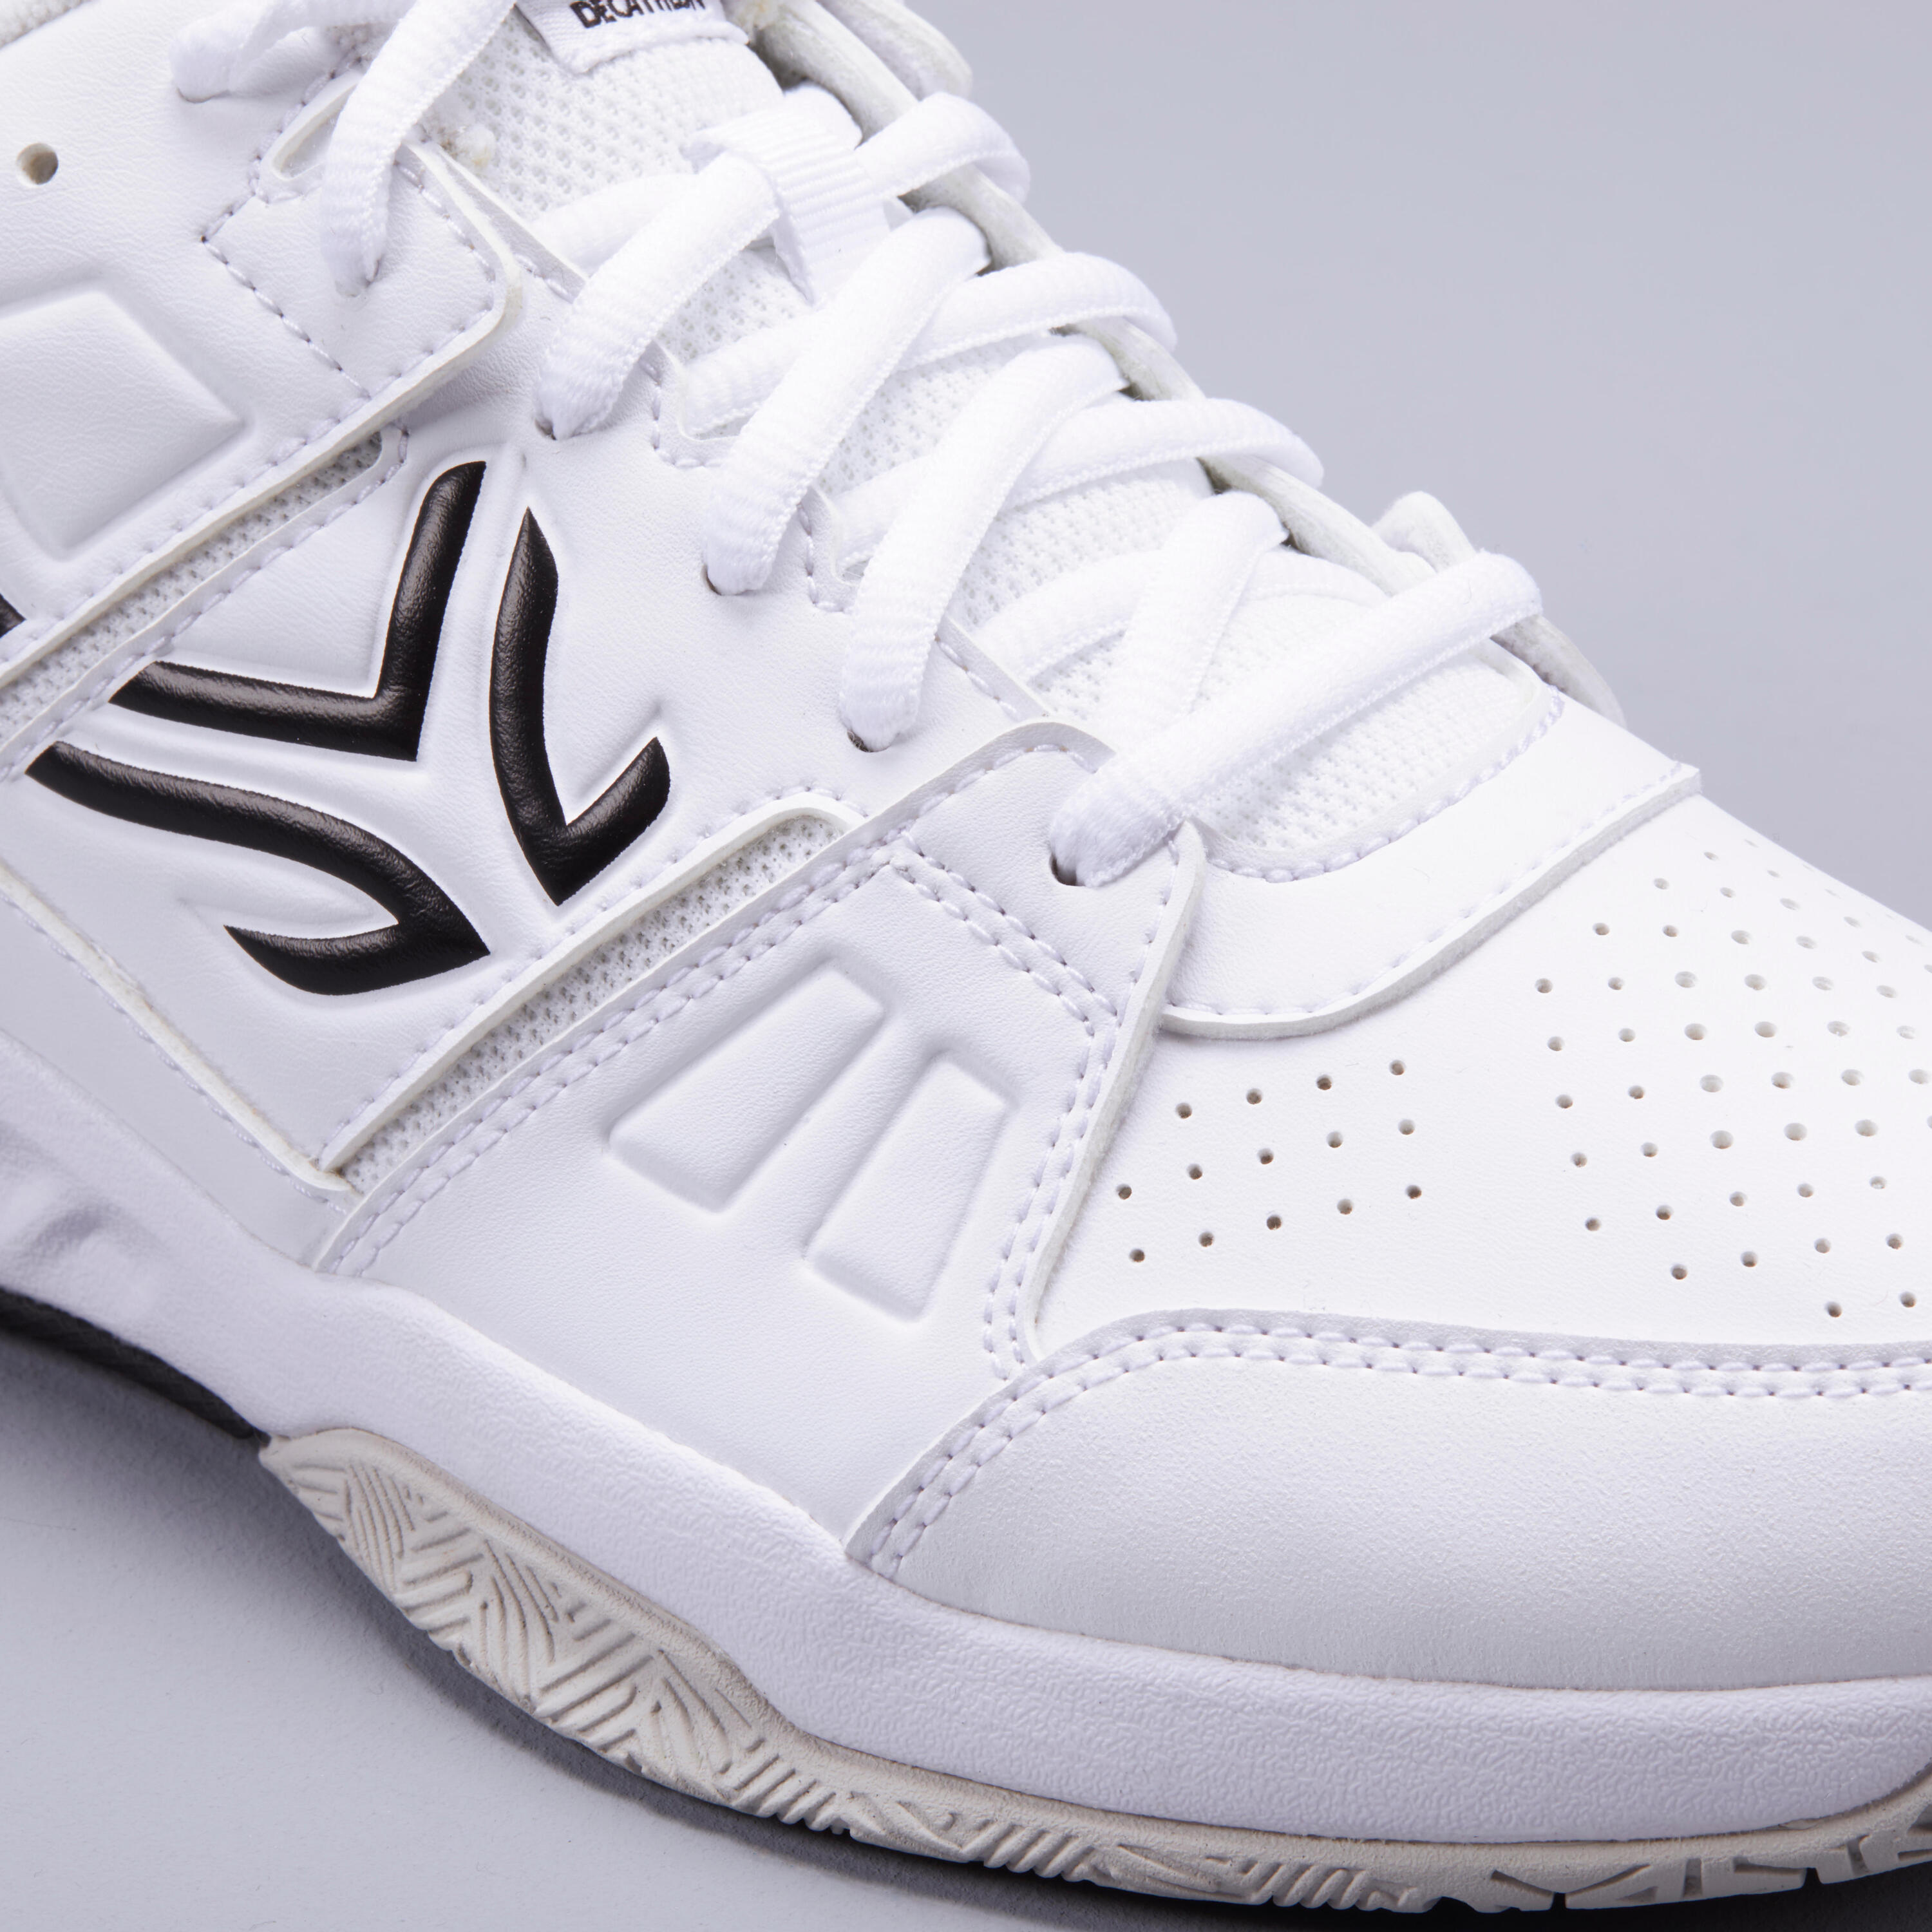 TS160 Multi-Court Tennis Shoes - White 8/8